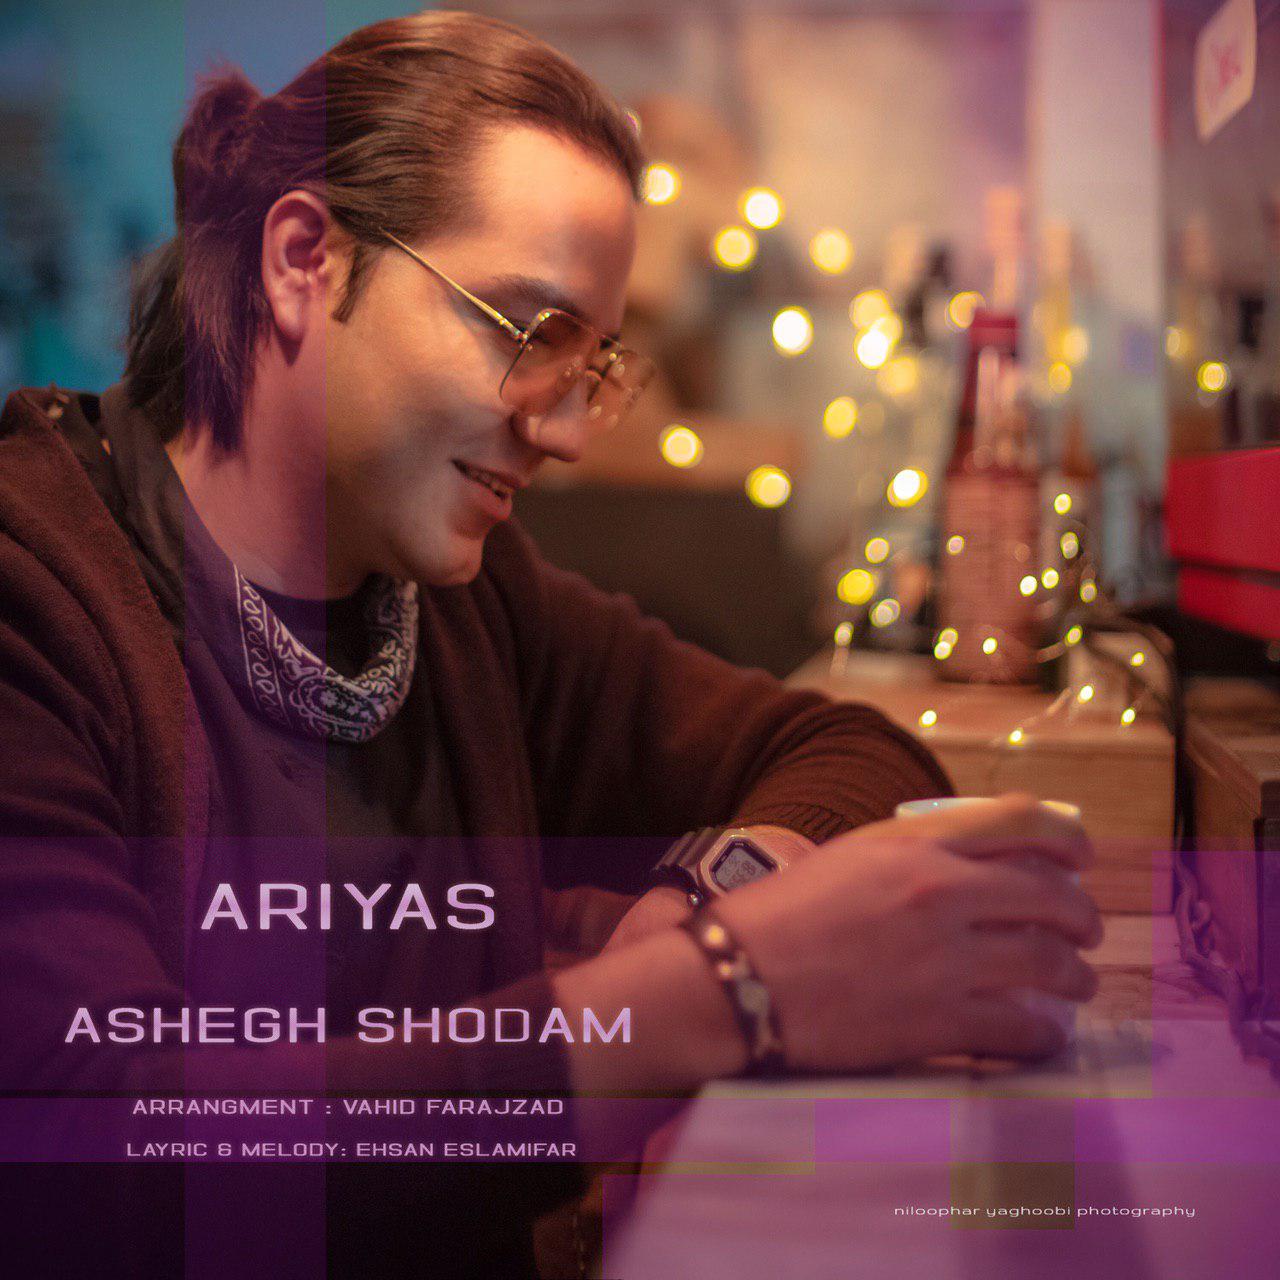  دانلود آهنگ جدید آریاس - عاشق شدم | Download New Music By Ariyas - Ashegh Shodam